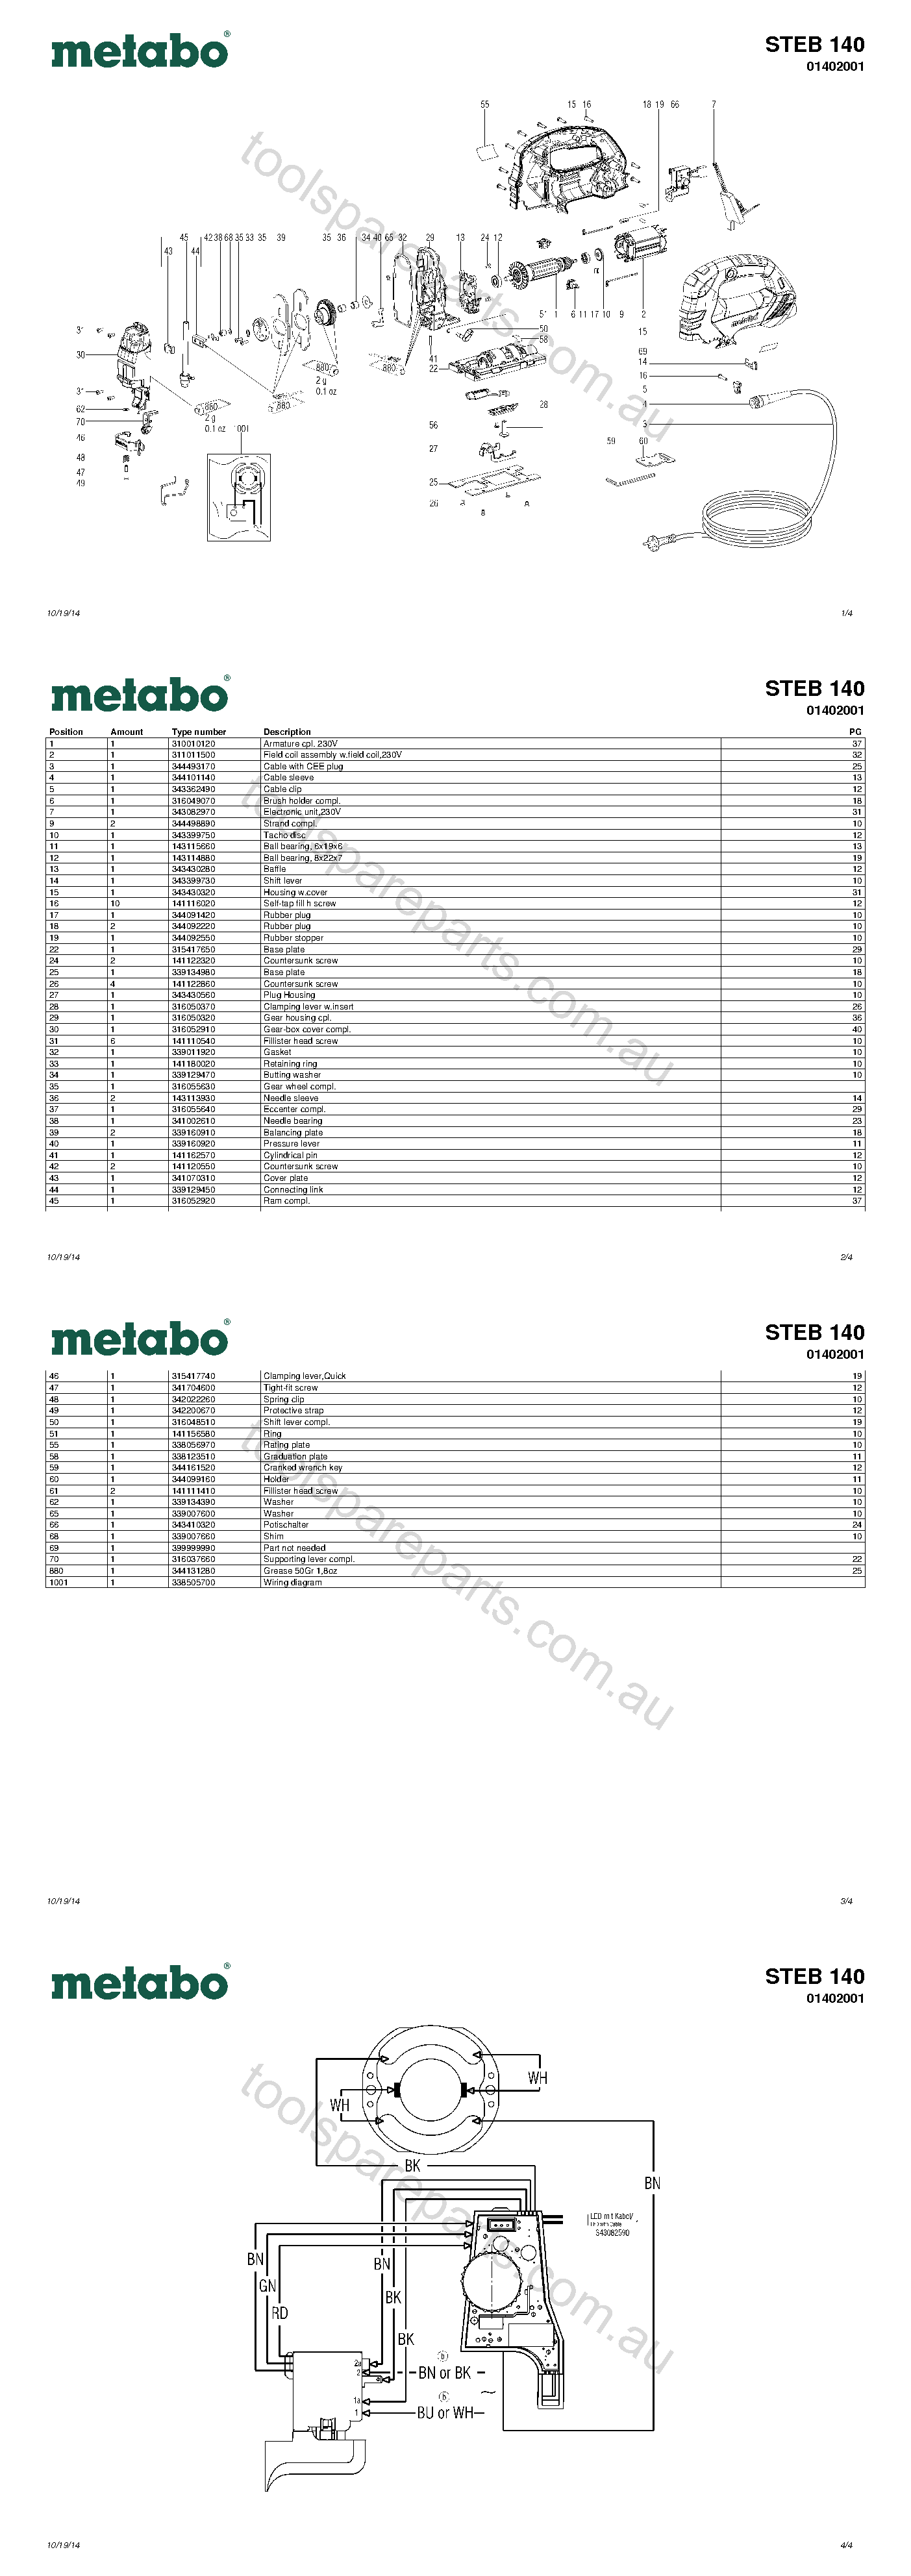 Metabo STEB 140 01402001  Diagram 1